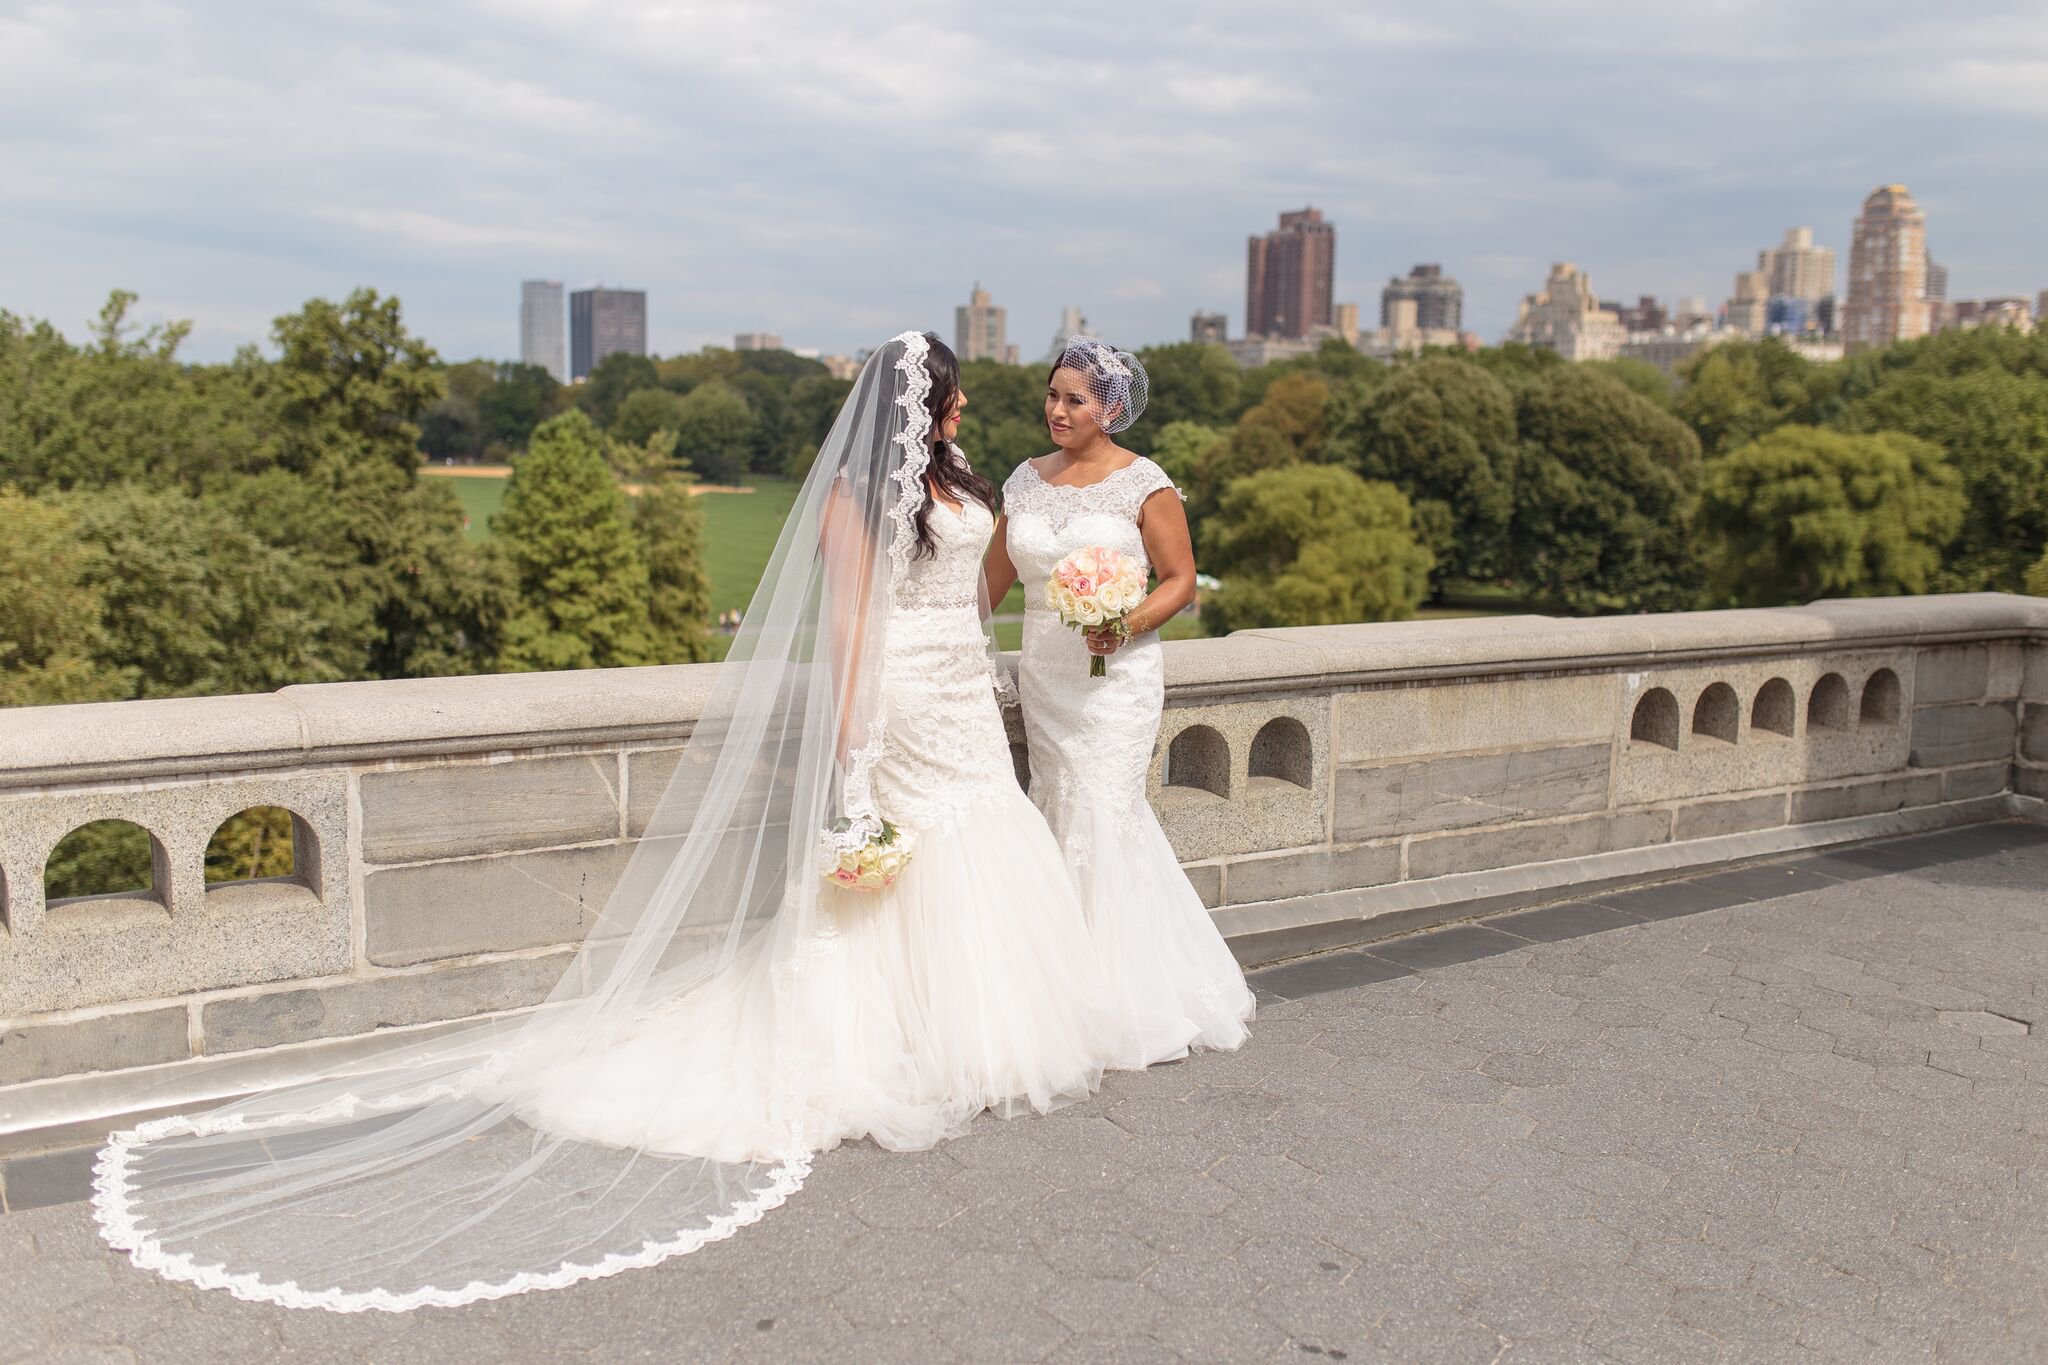 Top Central Park Wedding Locations